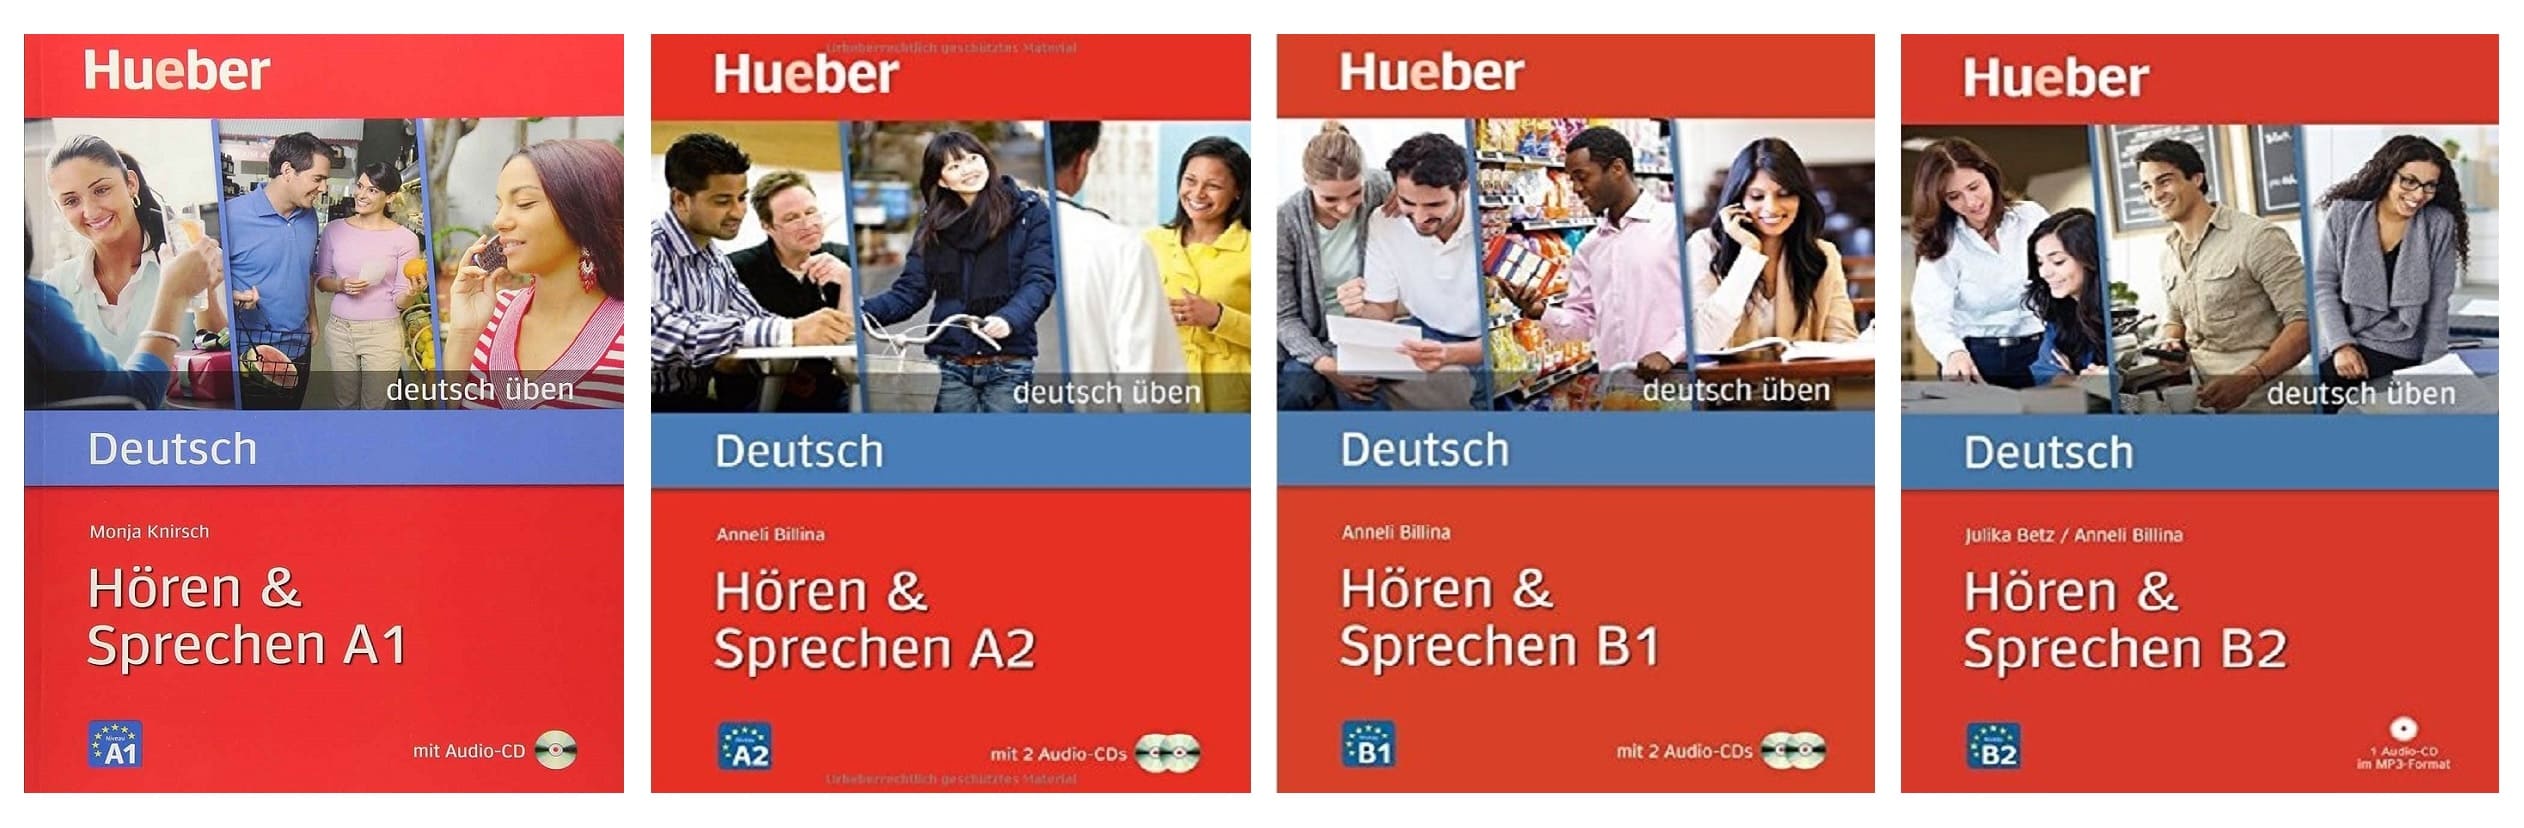 خرید کتاب زبان | هوقن اند اشپقشن | Deutsch Uben Horen & Sprechen | کتاب زبان آلمانی